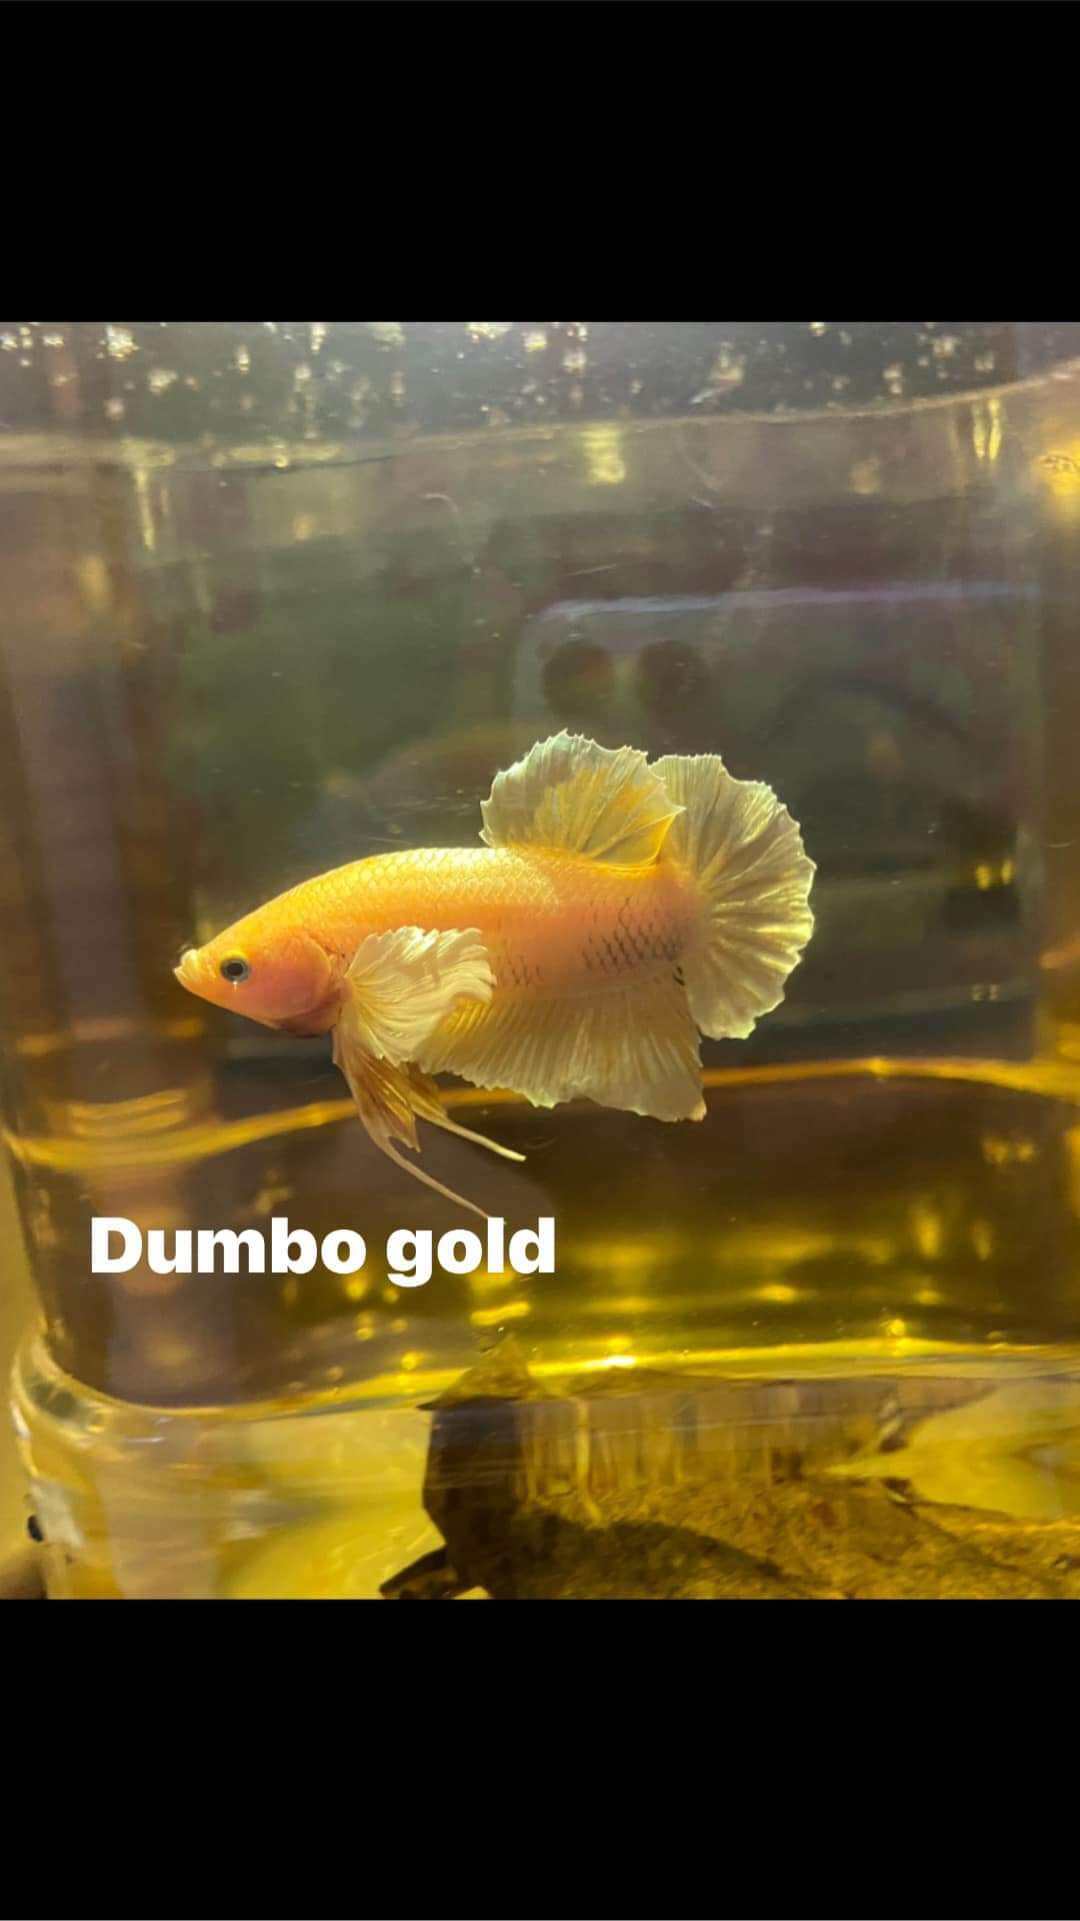 Dumbo gold 1 cặp